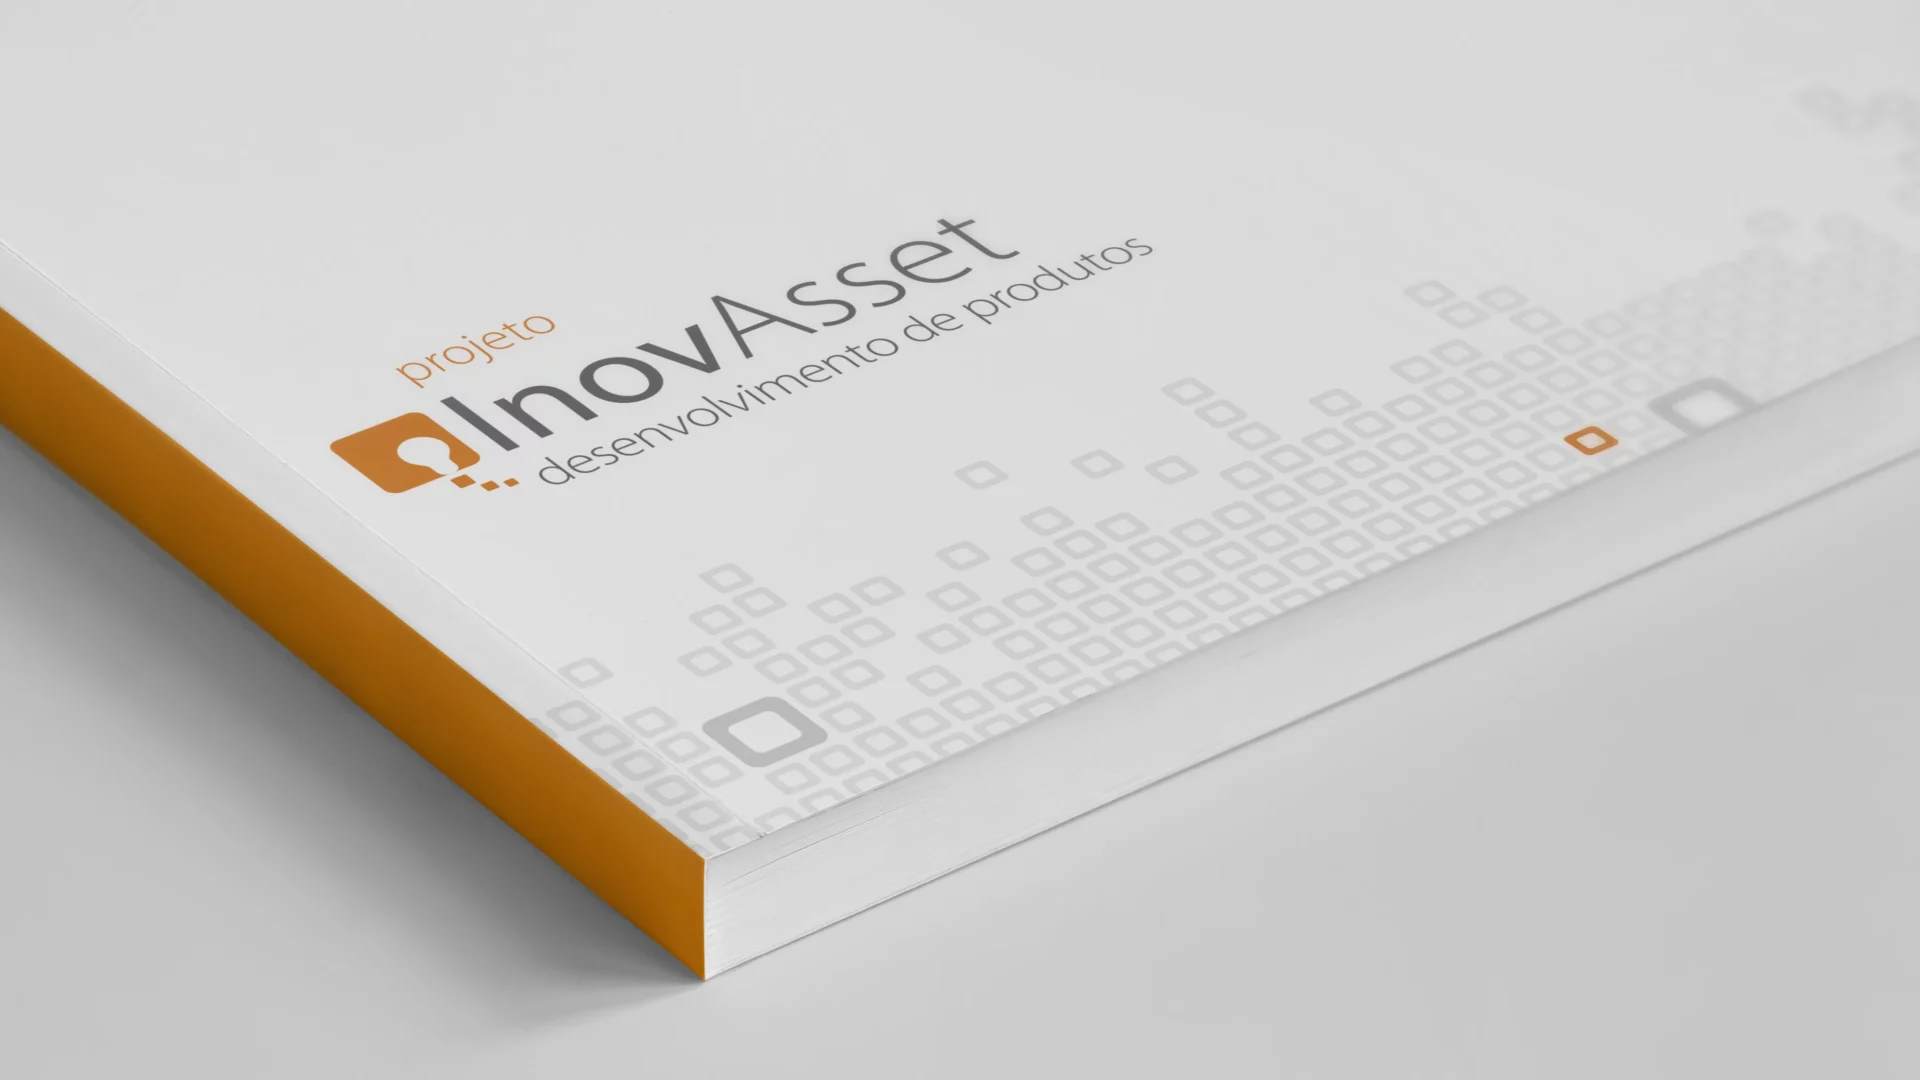 itau-book-inovasset-cover-detail